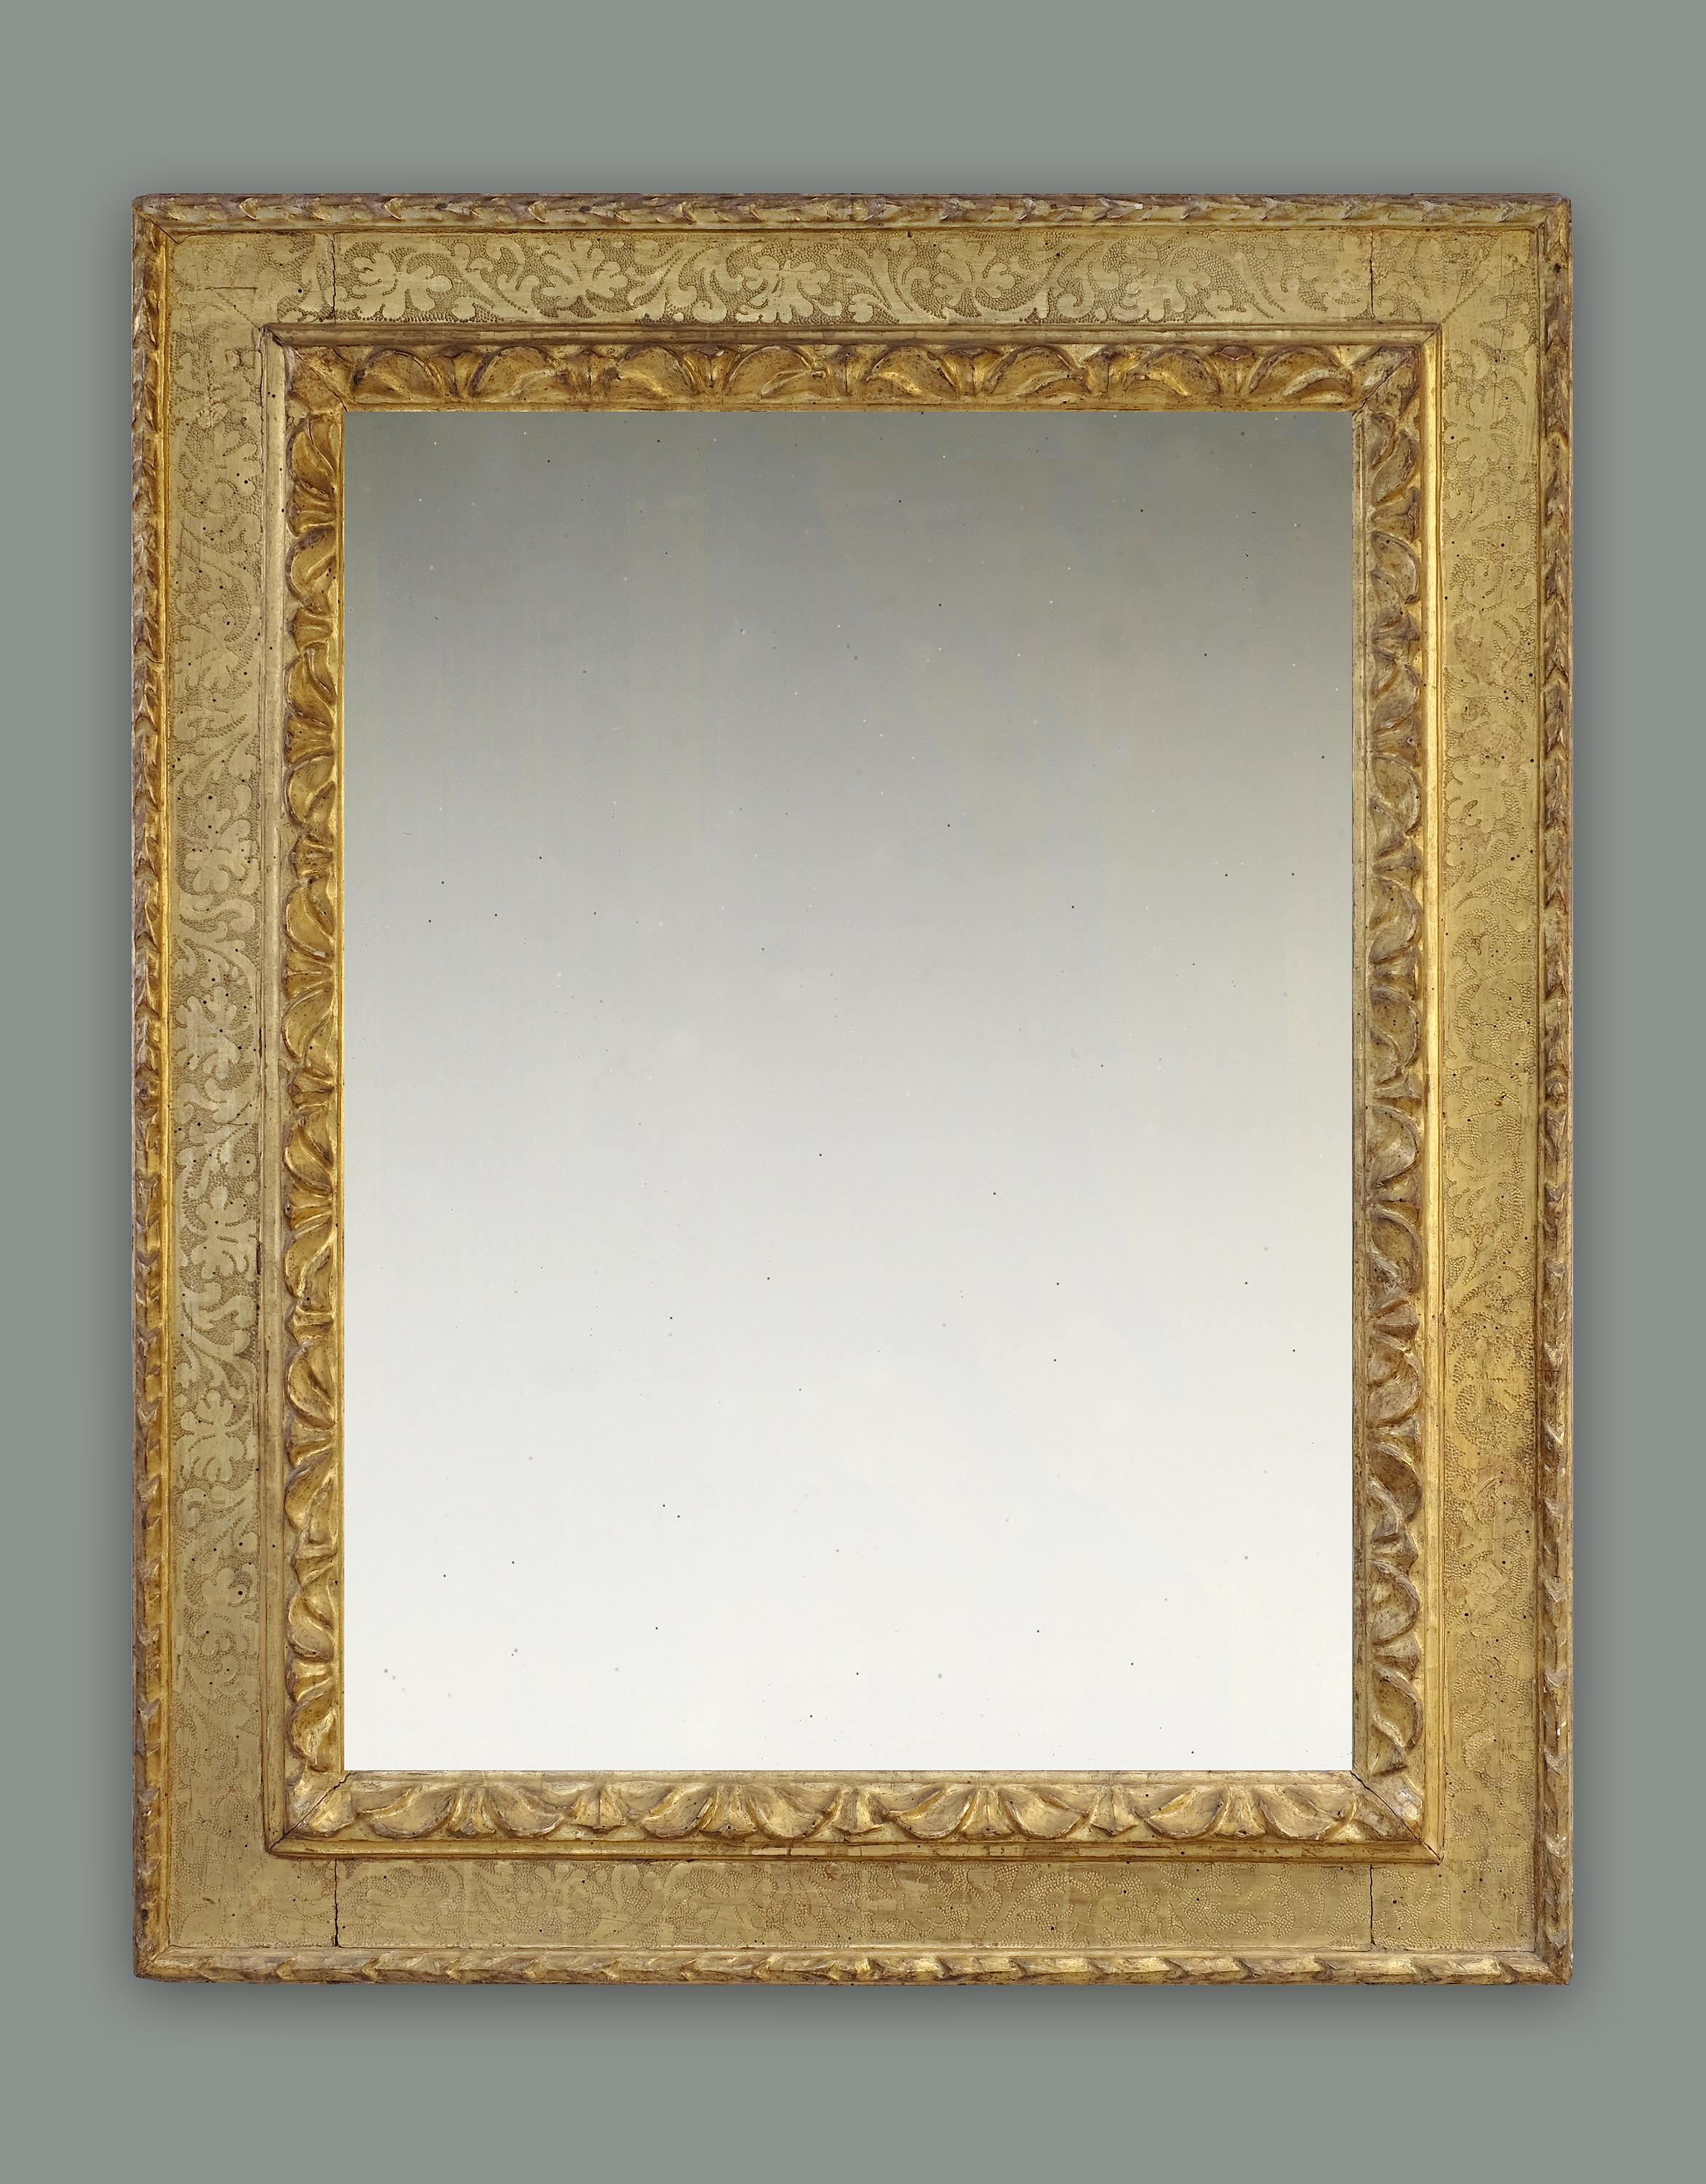 16th century mirror